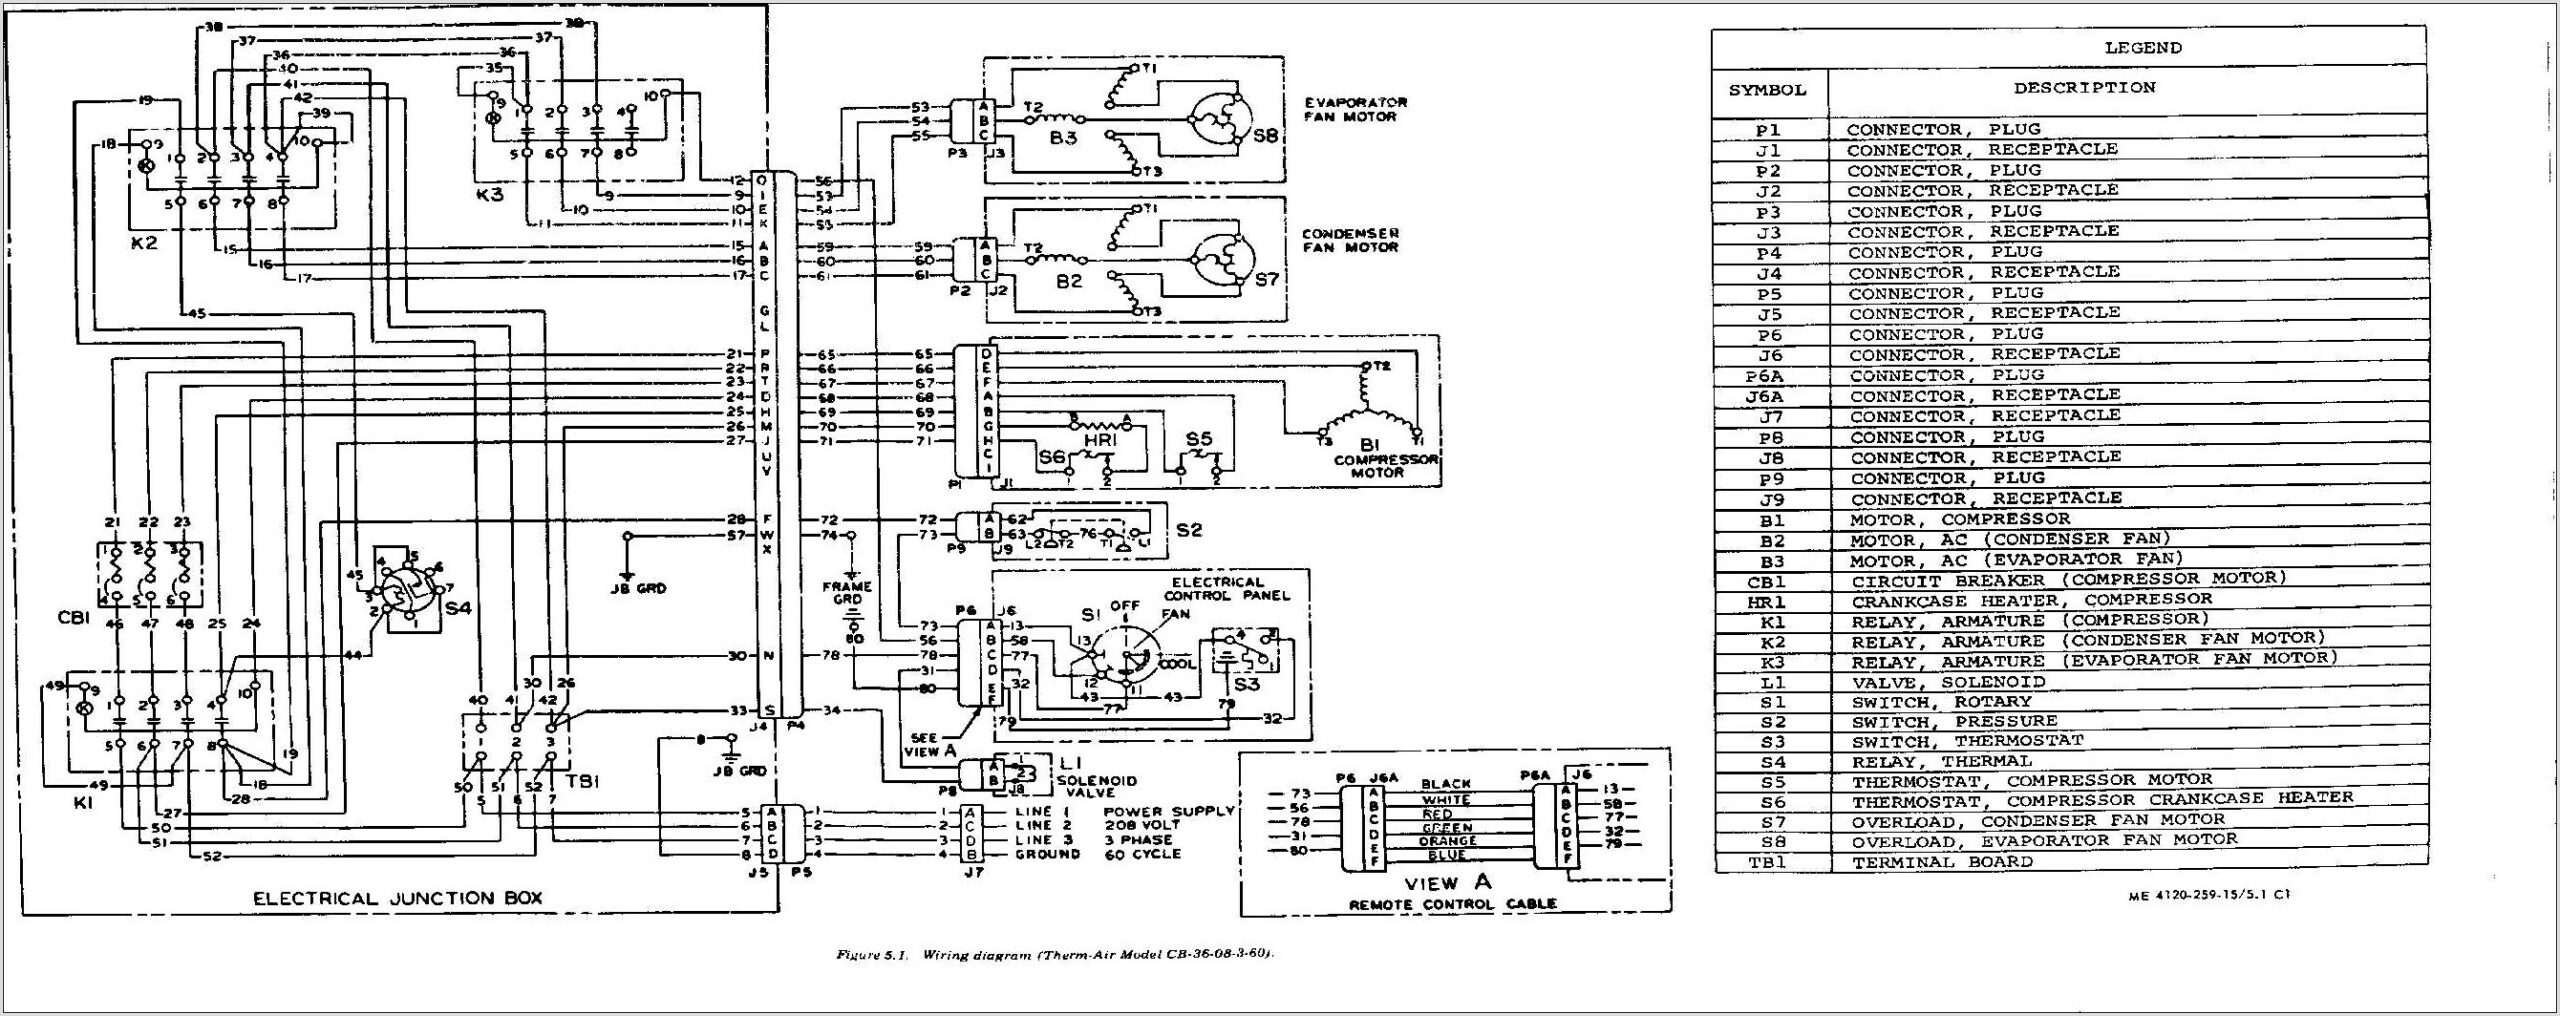 Trane Ac Unit Wiring Diagrams